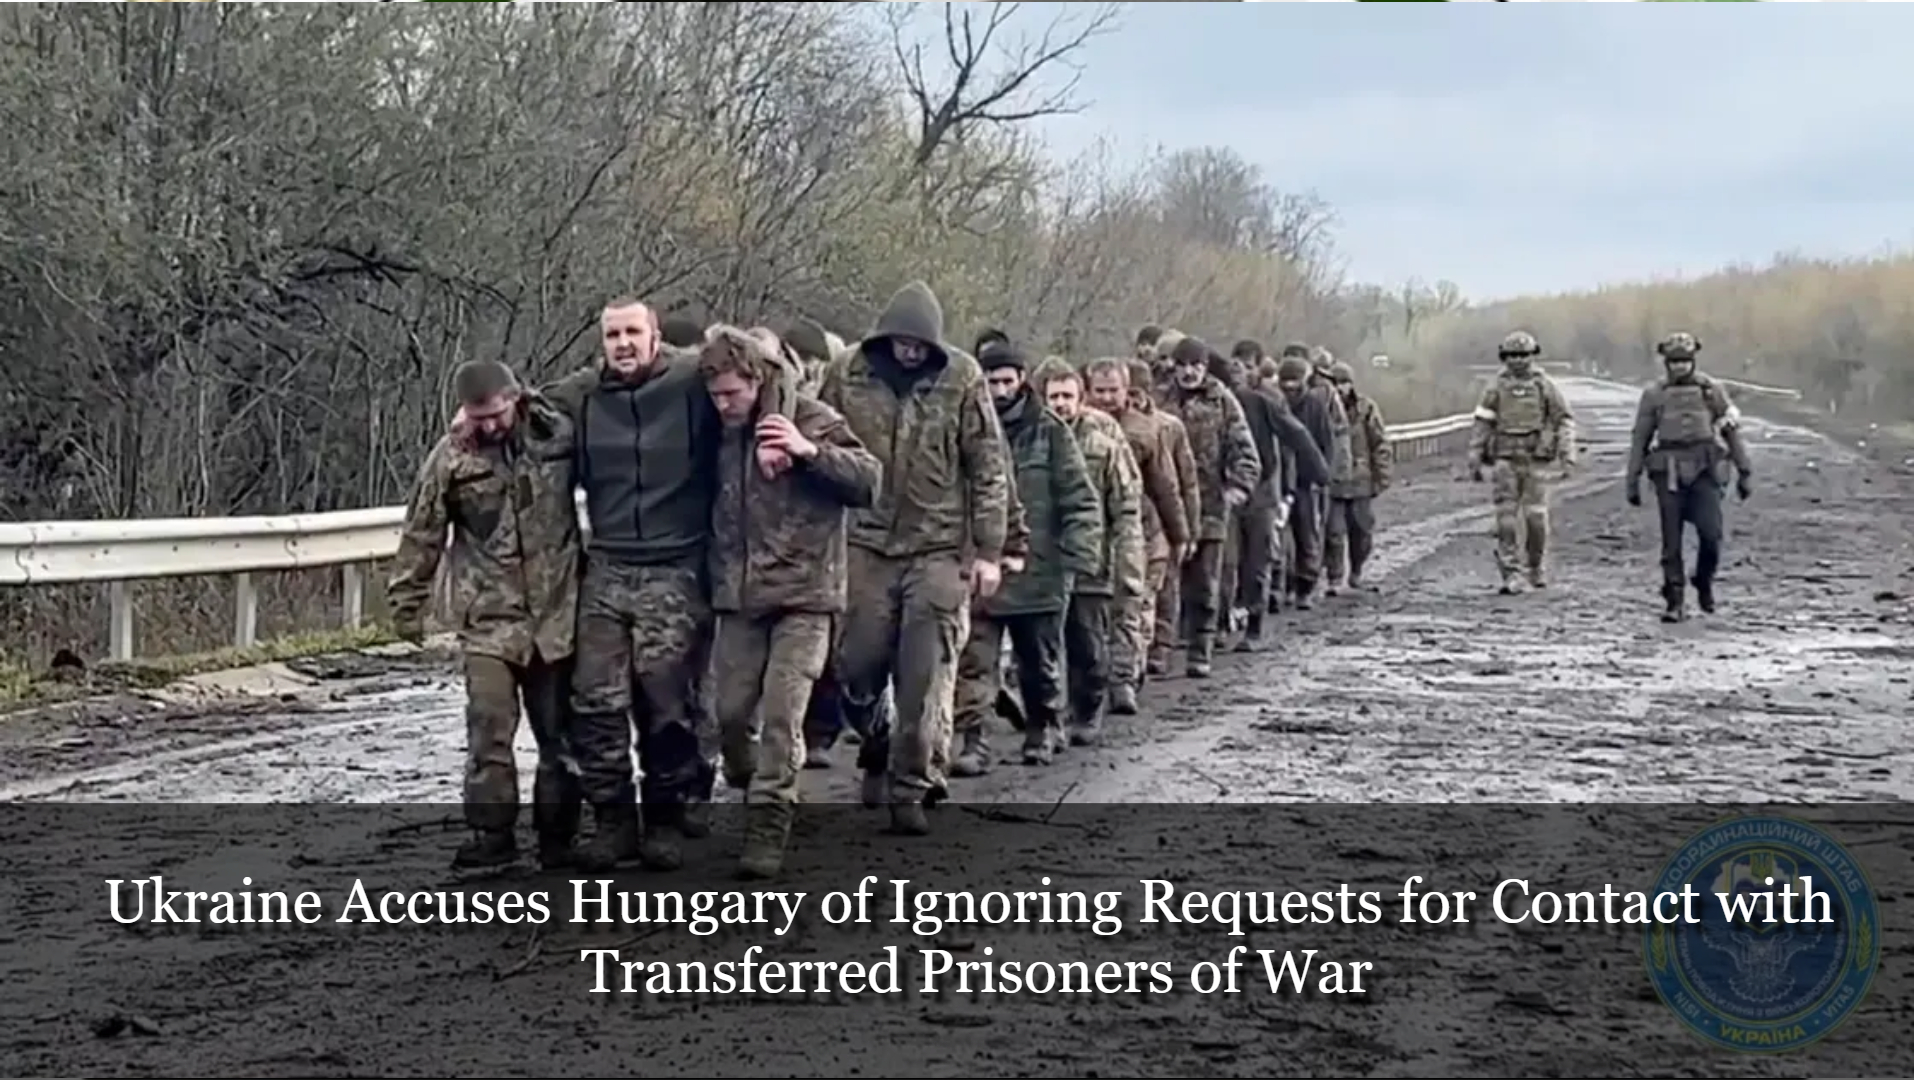 Ukraine: Hungary's Self Interest Ignoring Prisoner Requests Causes Diplomatic Row 14